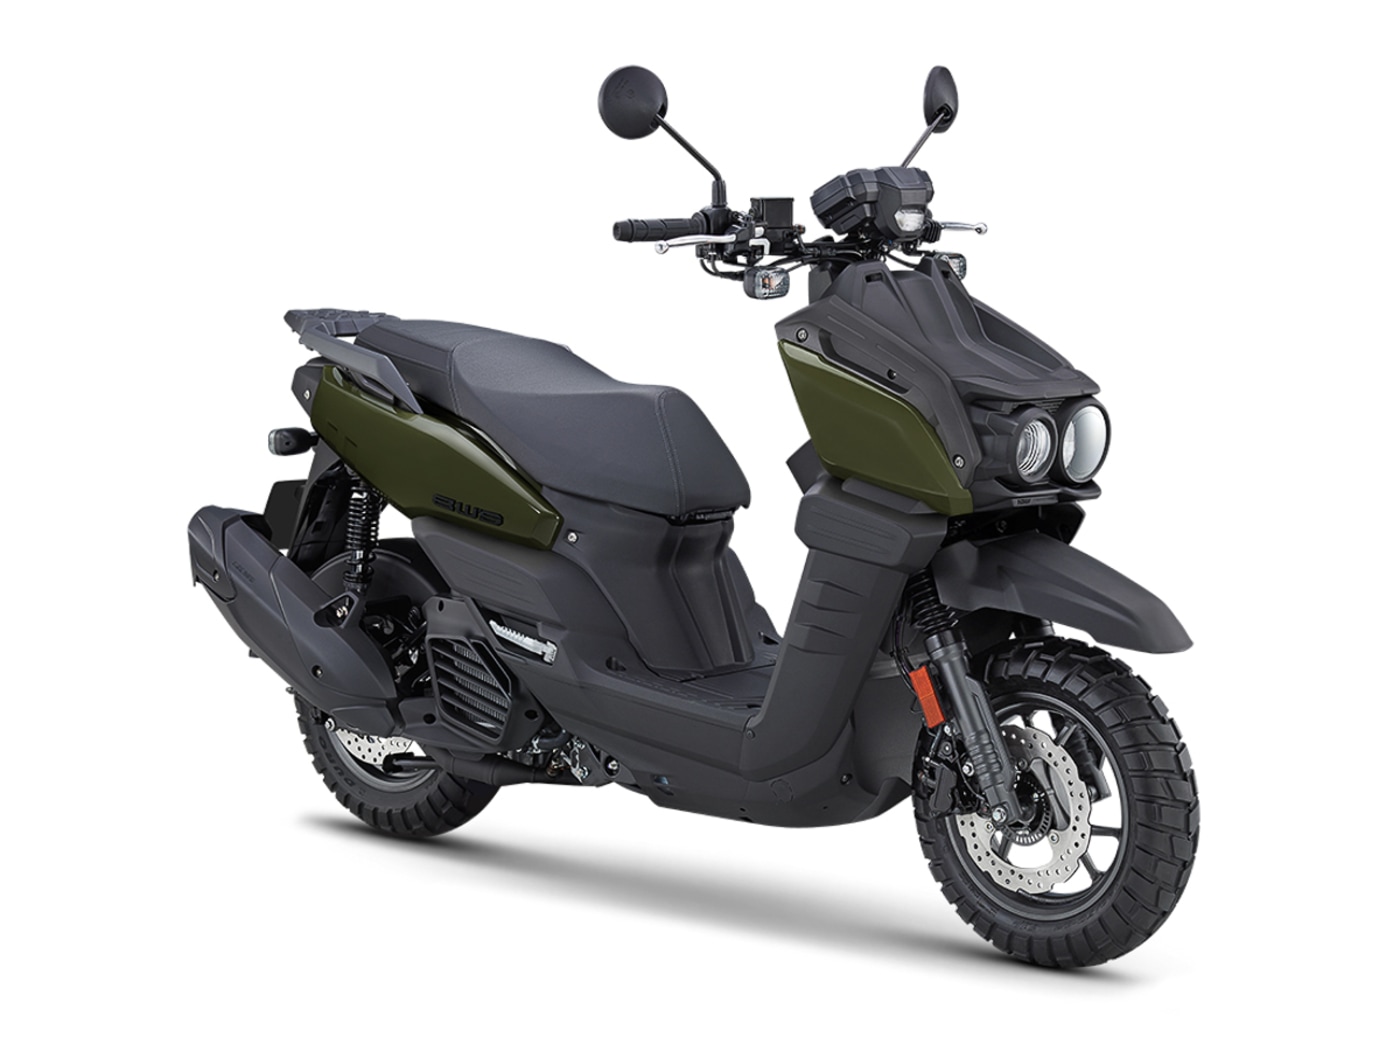 Yamaha Reveals BW'S 125 'Adventure' Scooter In Vietnam